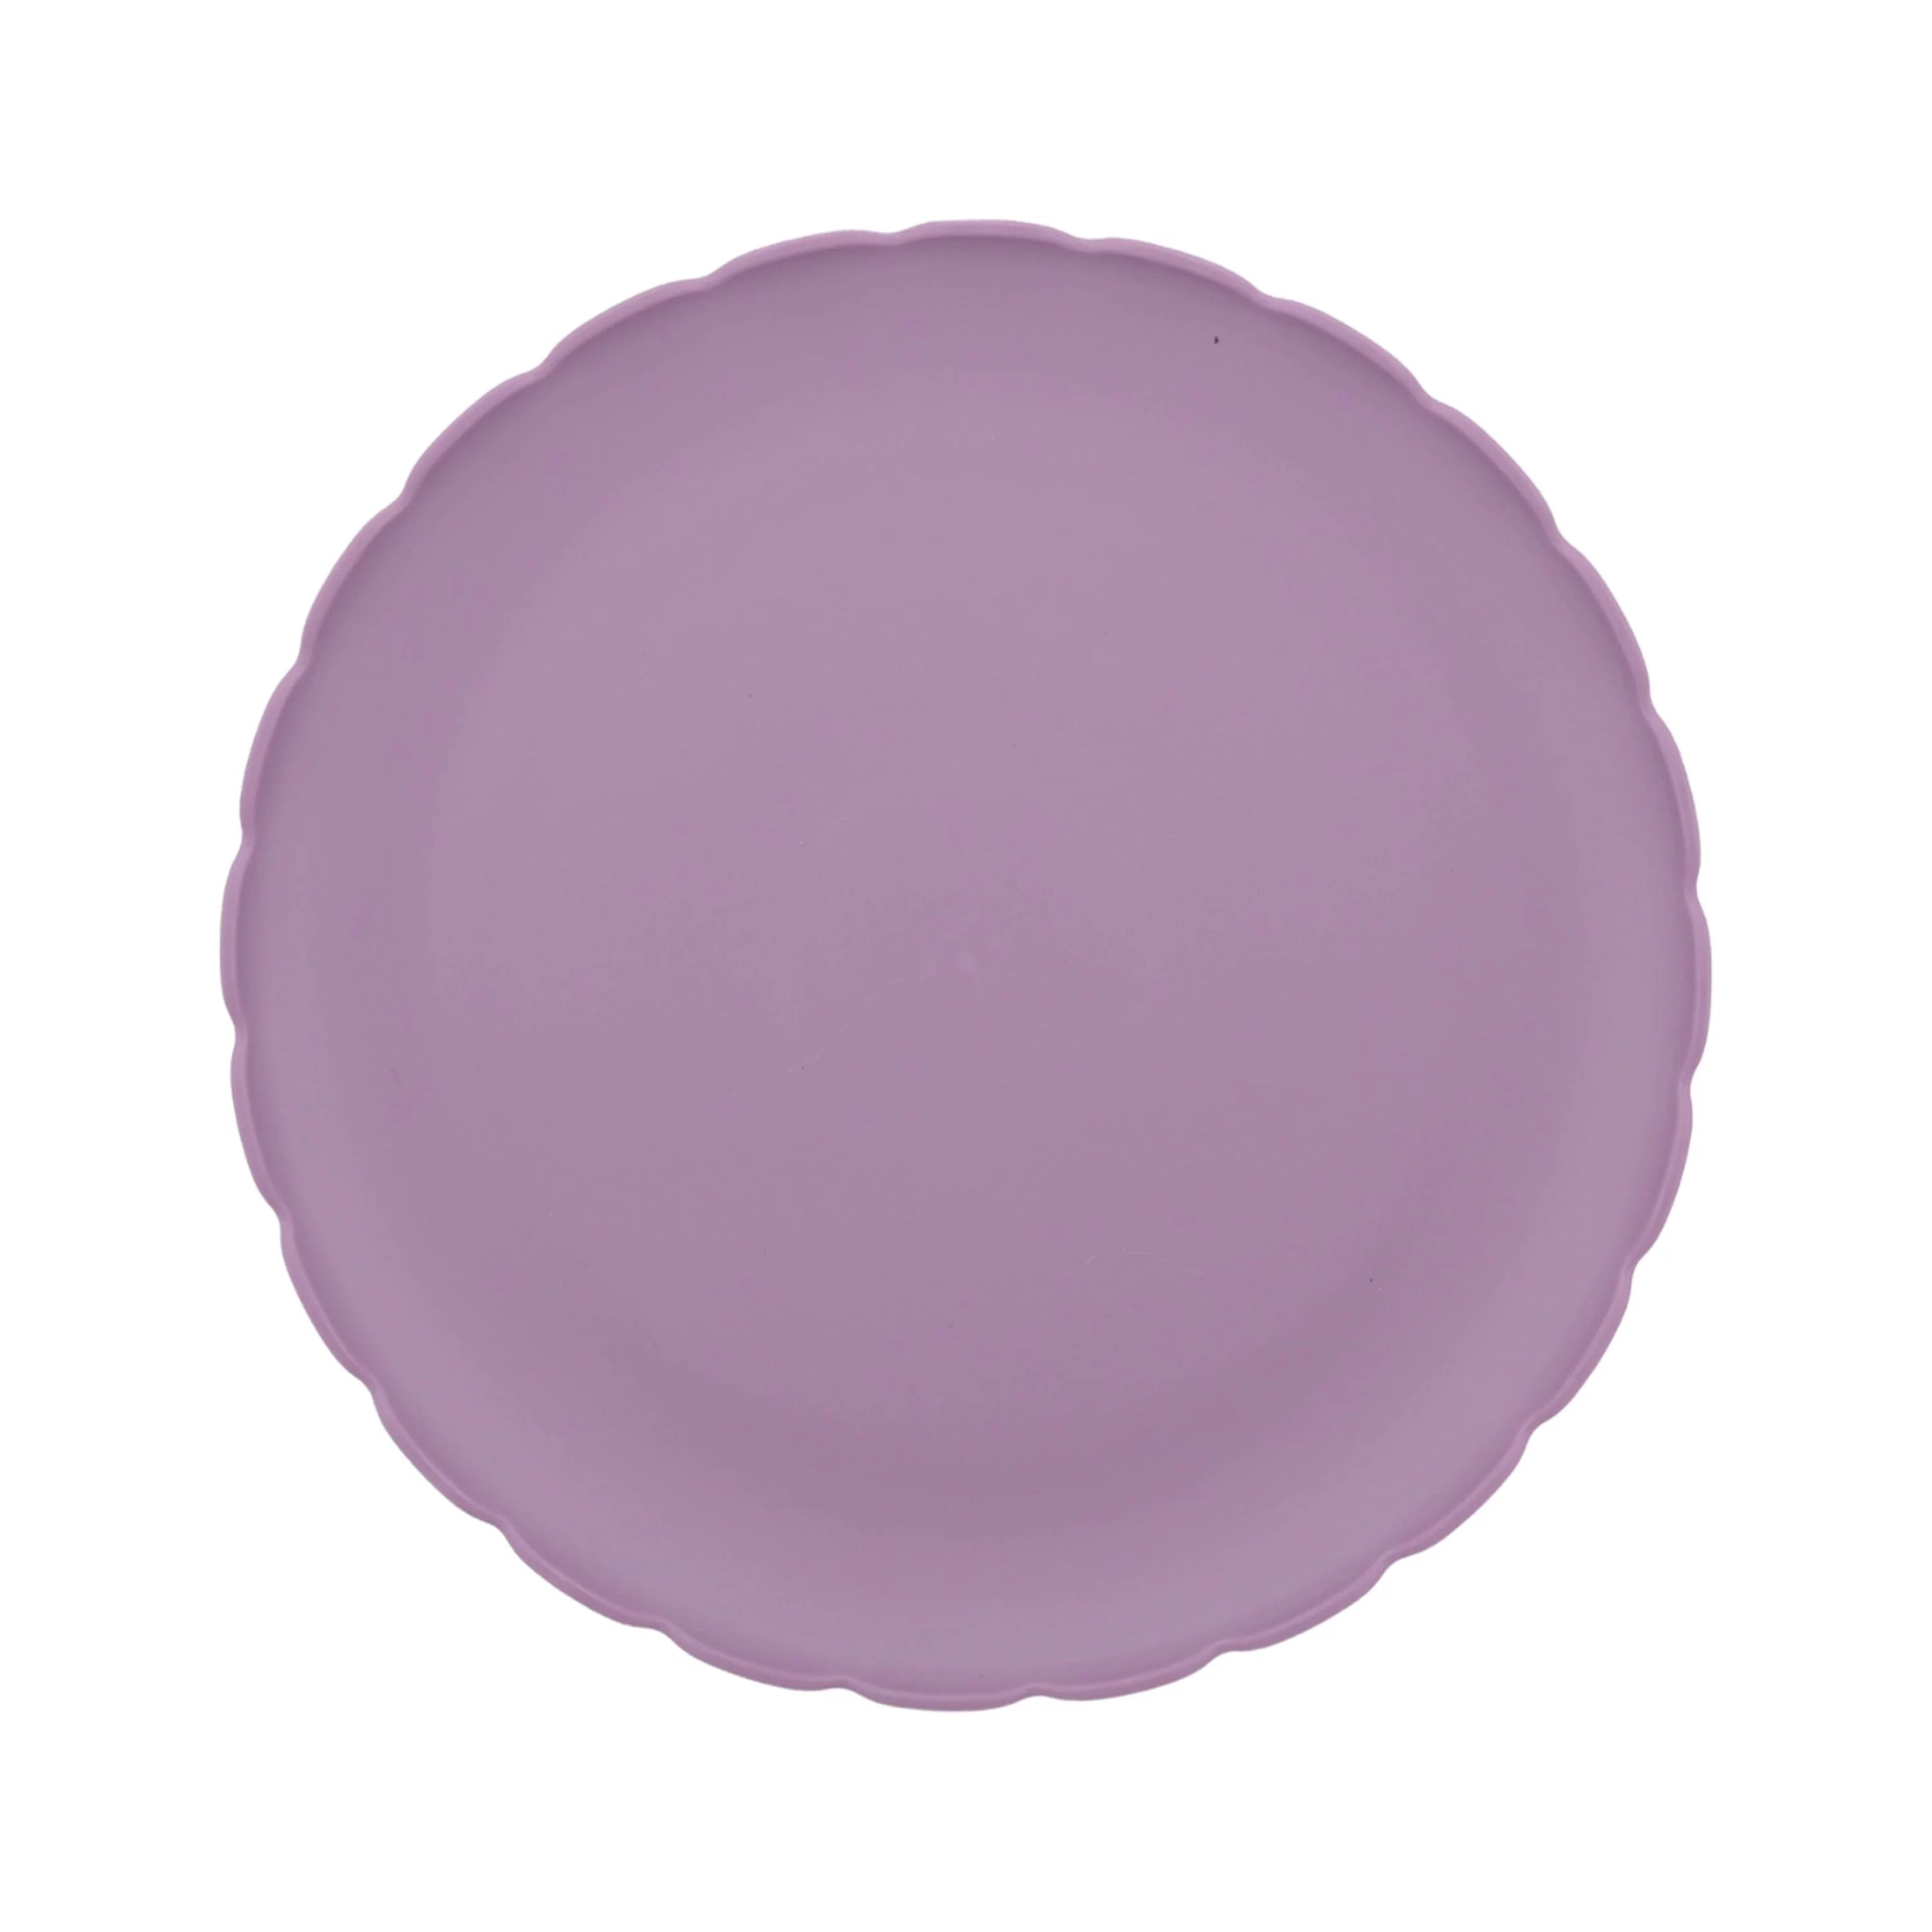 Mainstays 10.5 inch Round Plastic Plate, Purple | Walmart (US)